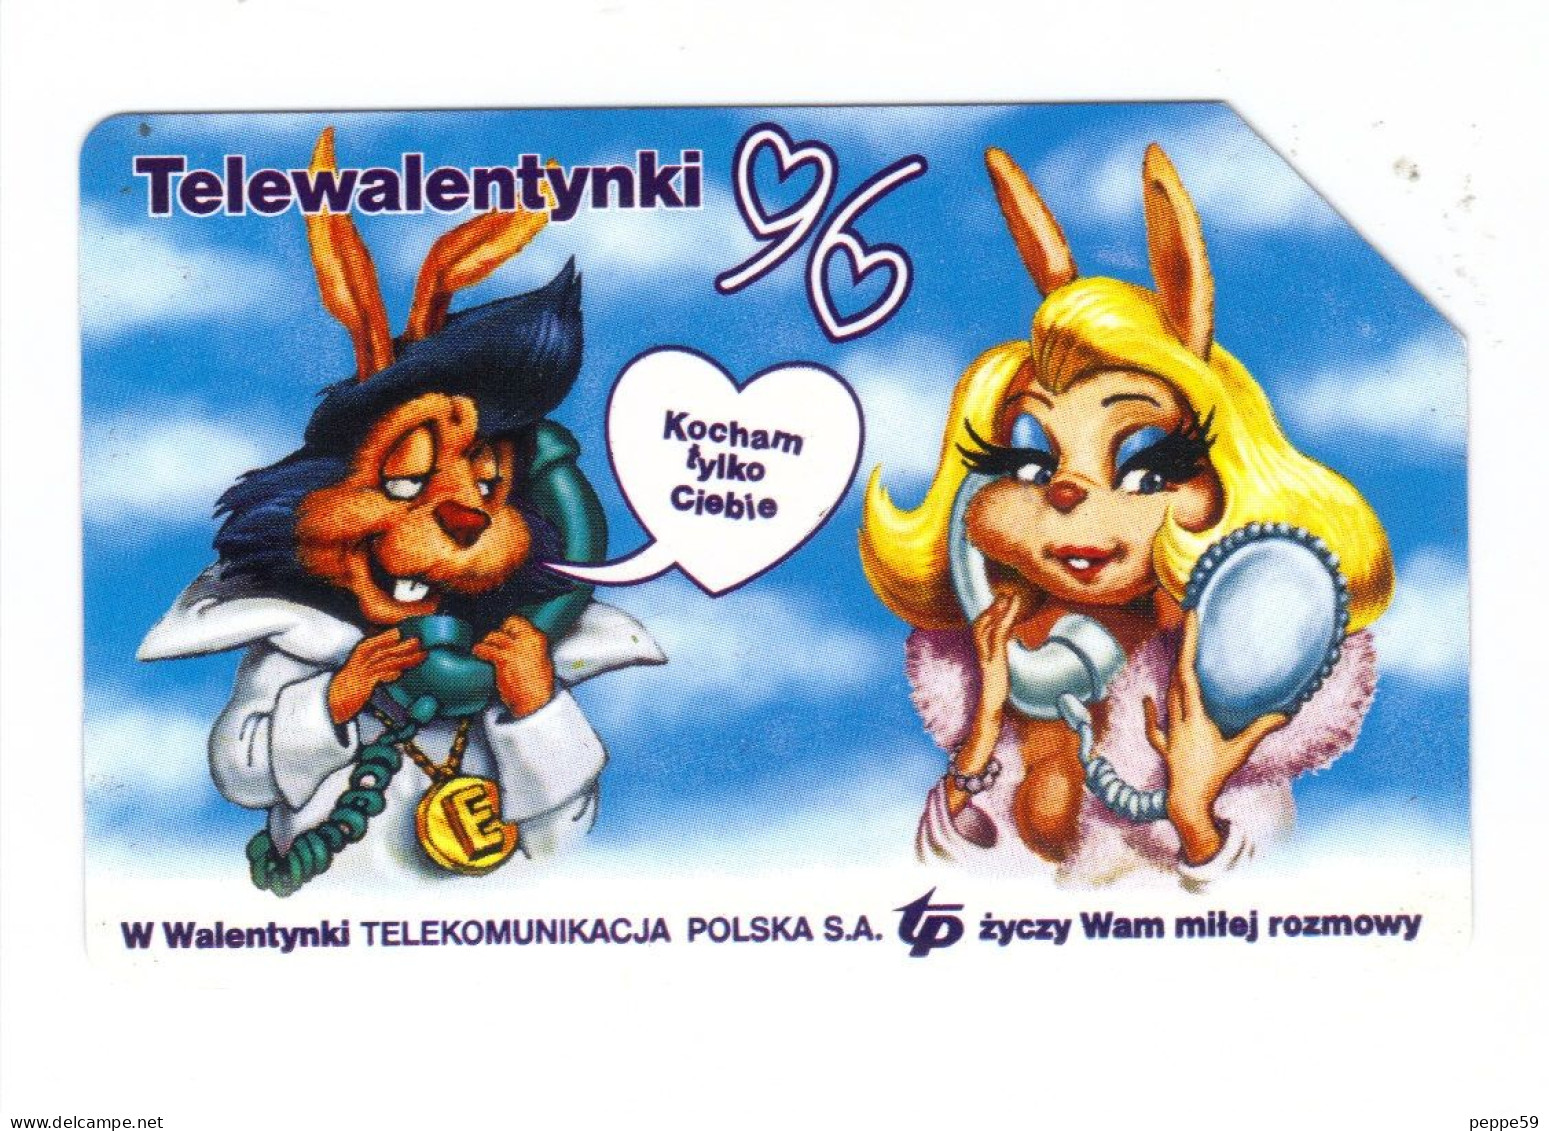 Carta Telefonica Polonia - Telewalentynki 96 - Pologne